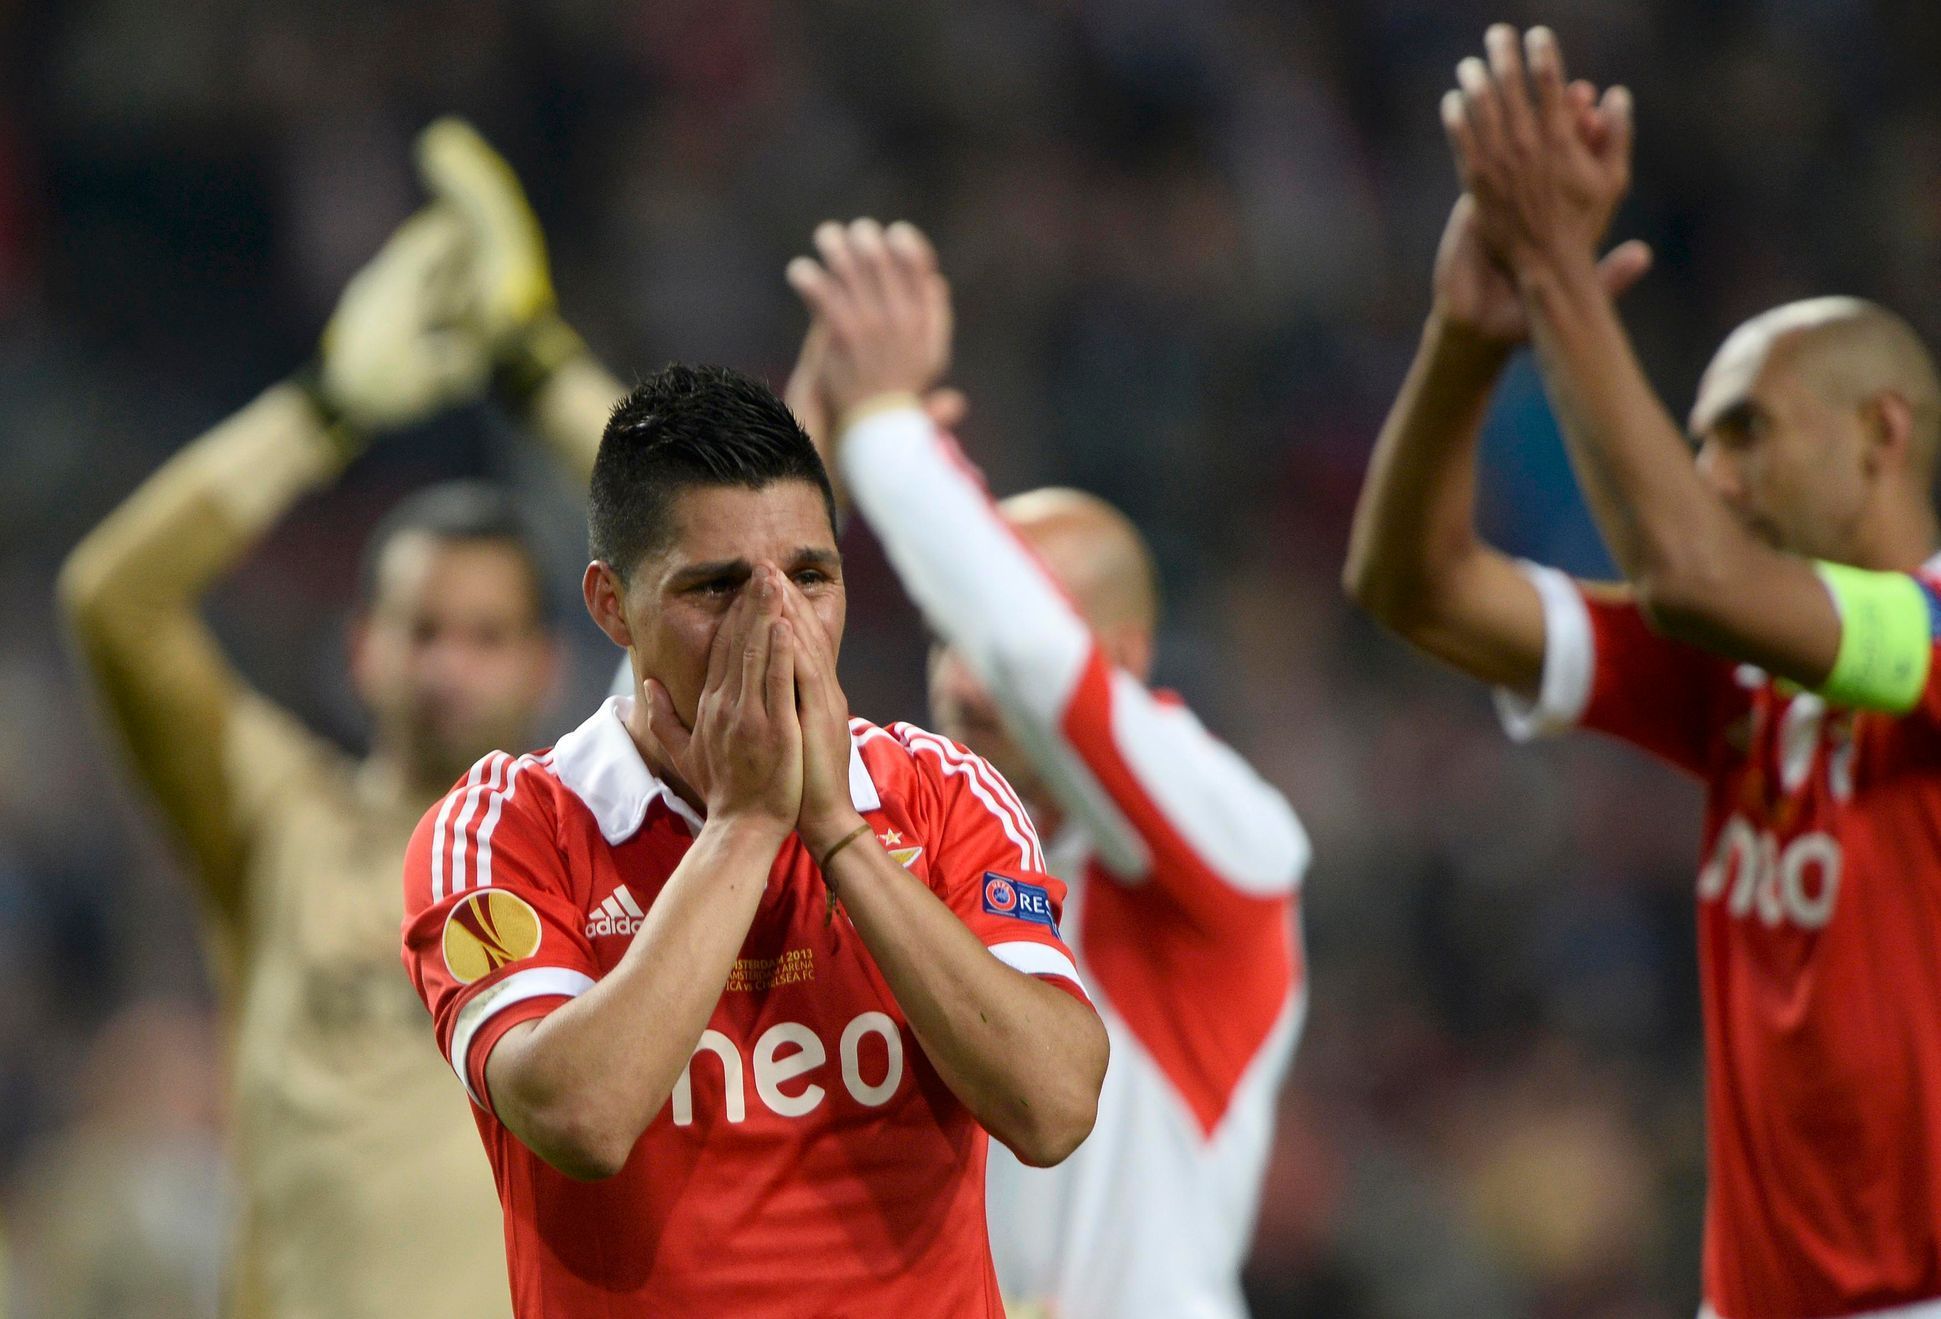 Fotbal, finále Evropské ligy, Chelsea - Benfica: smutek Benfiky, Enzo Perez